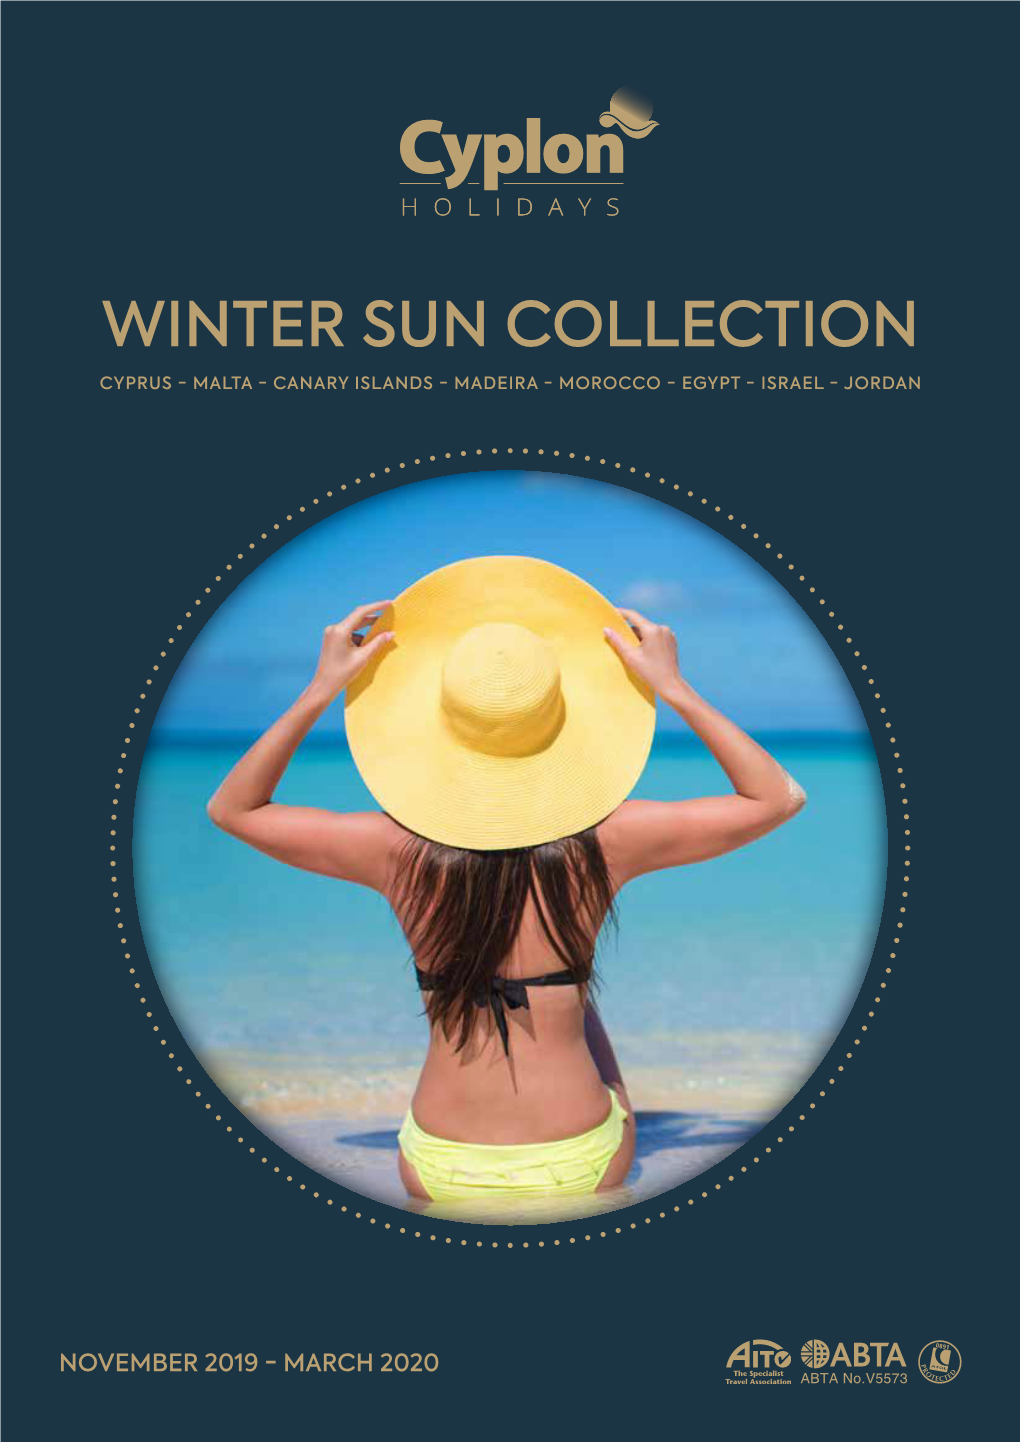 Winter Sun Collection Cyprus - Malta - Canary Islands - Madeira - Morocco - Egypt - Israel - Jordan